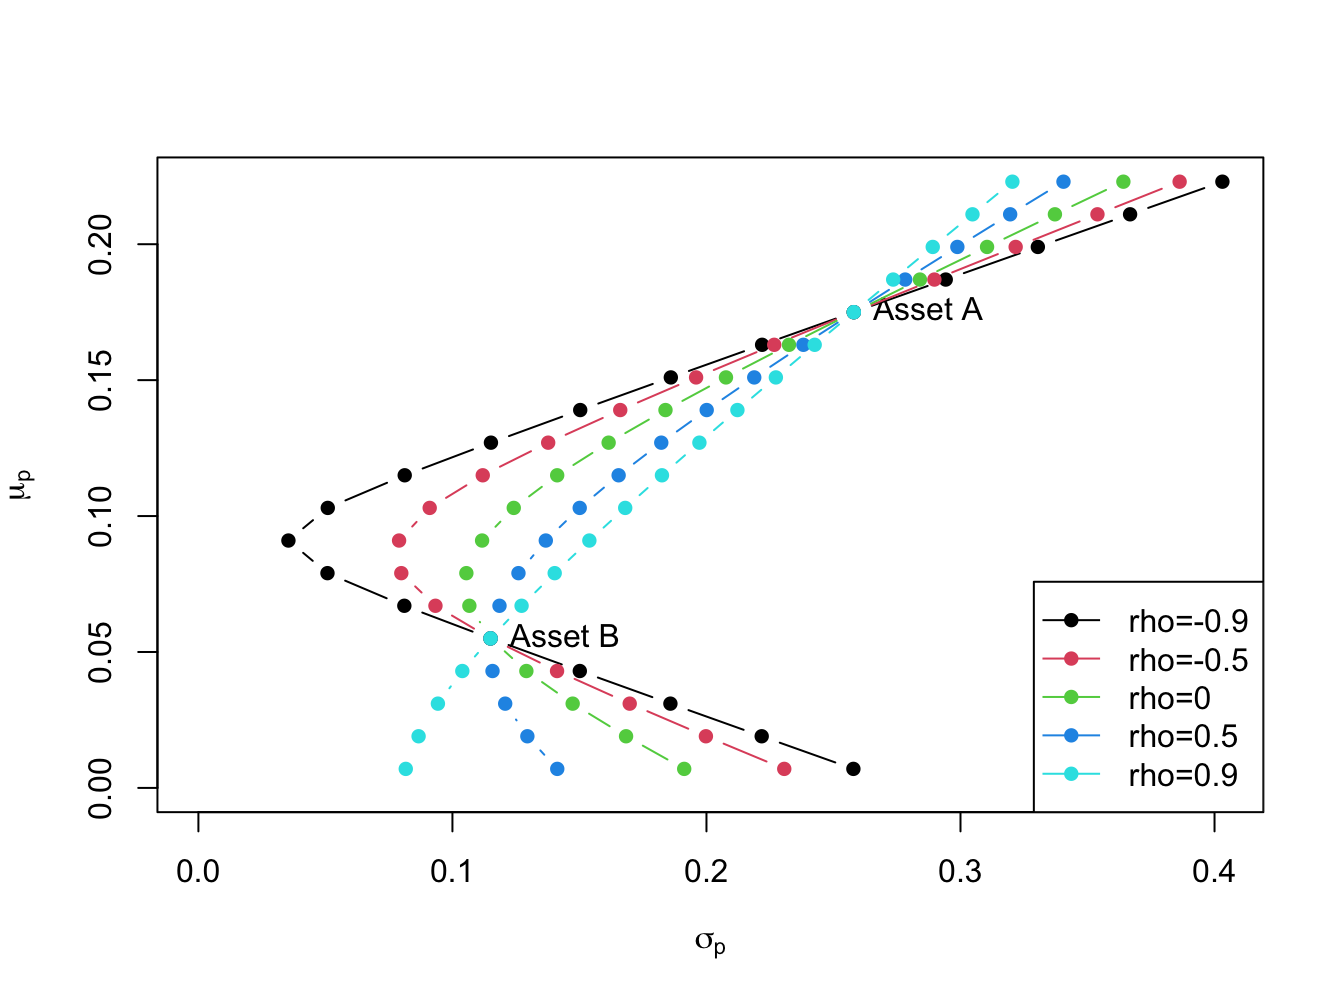 Portfolio frontier as a function of correlation.